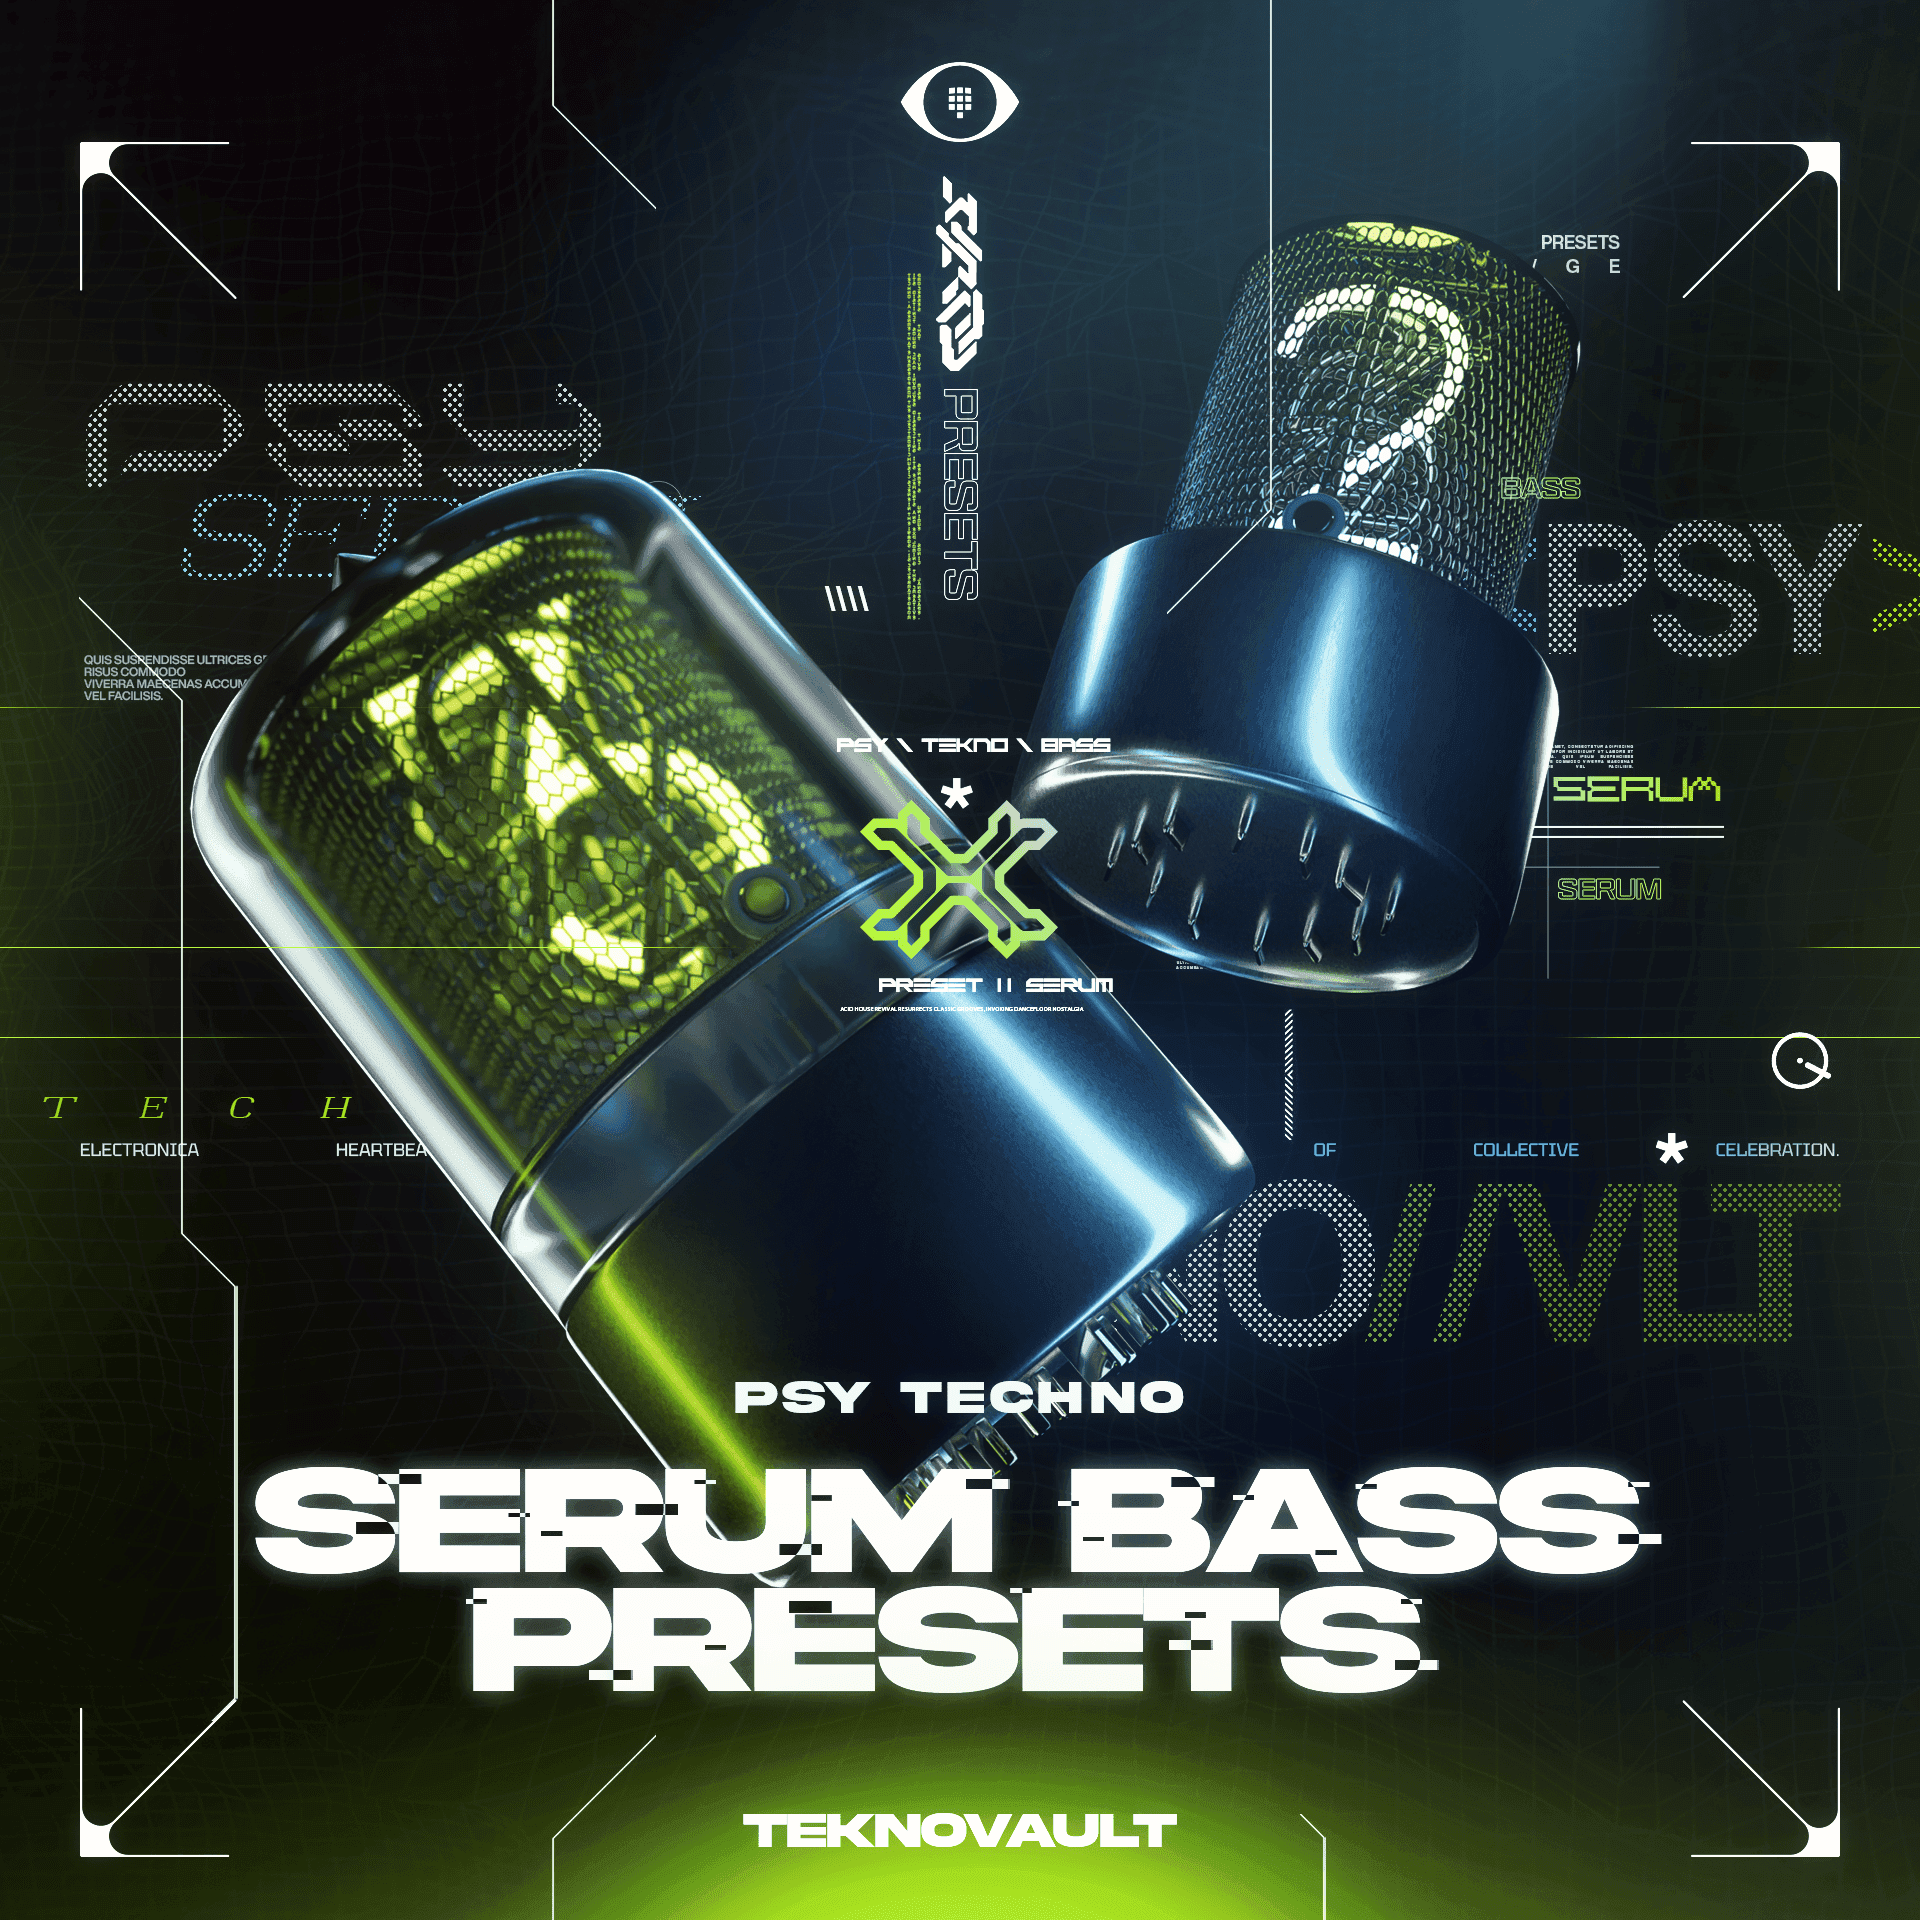 Psy Techno Serum Bass Presets (Vol. 1) - Teknovault